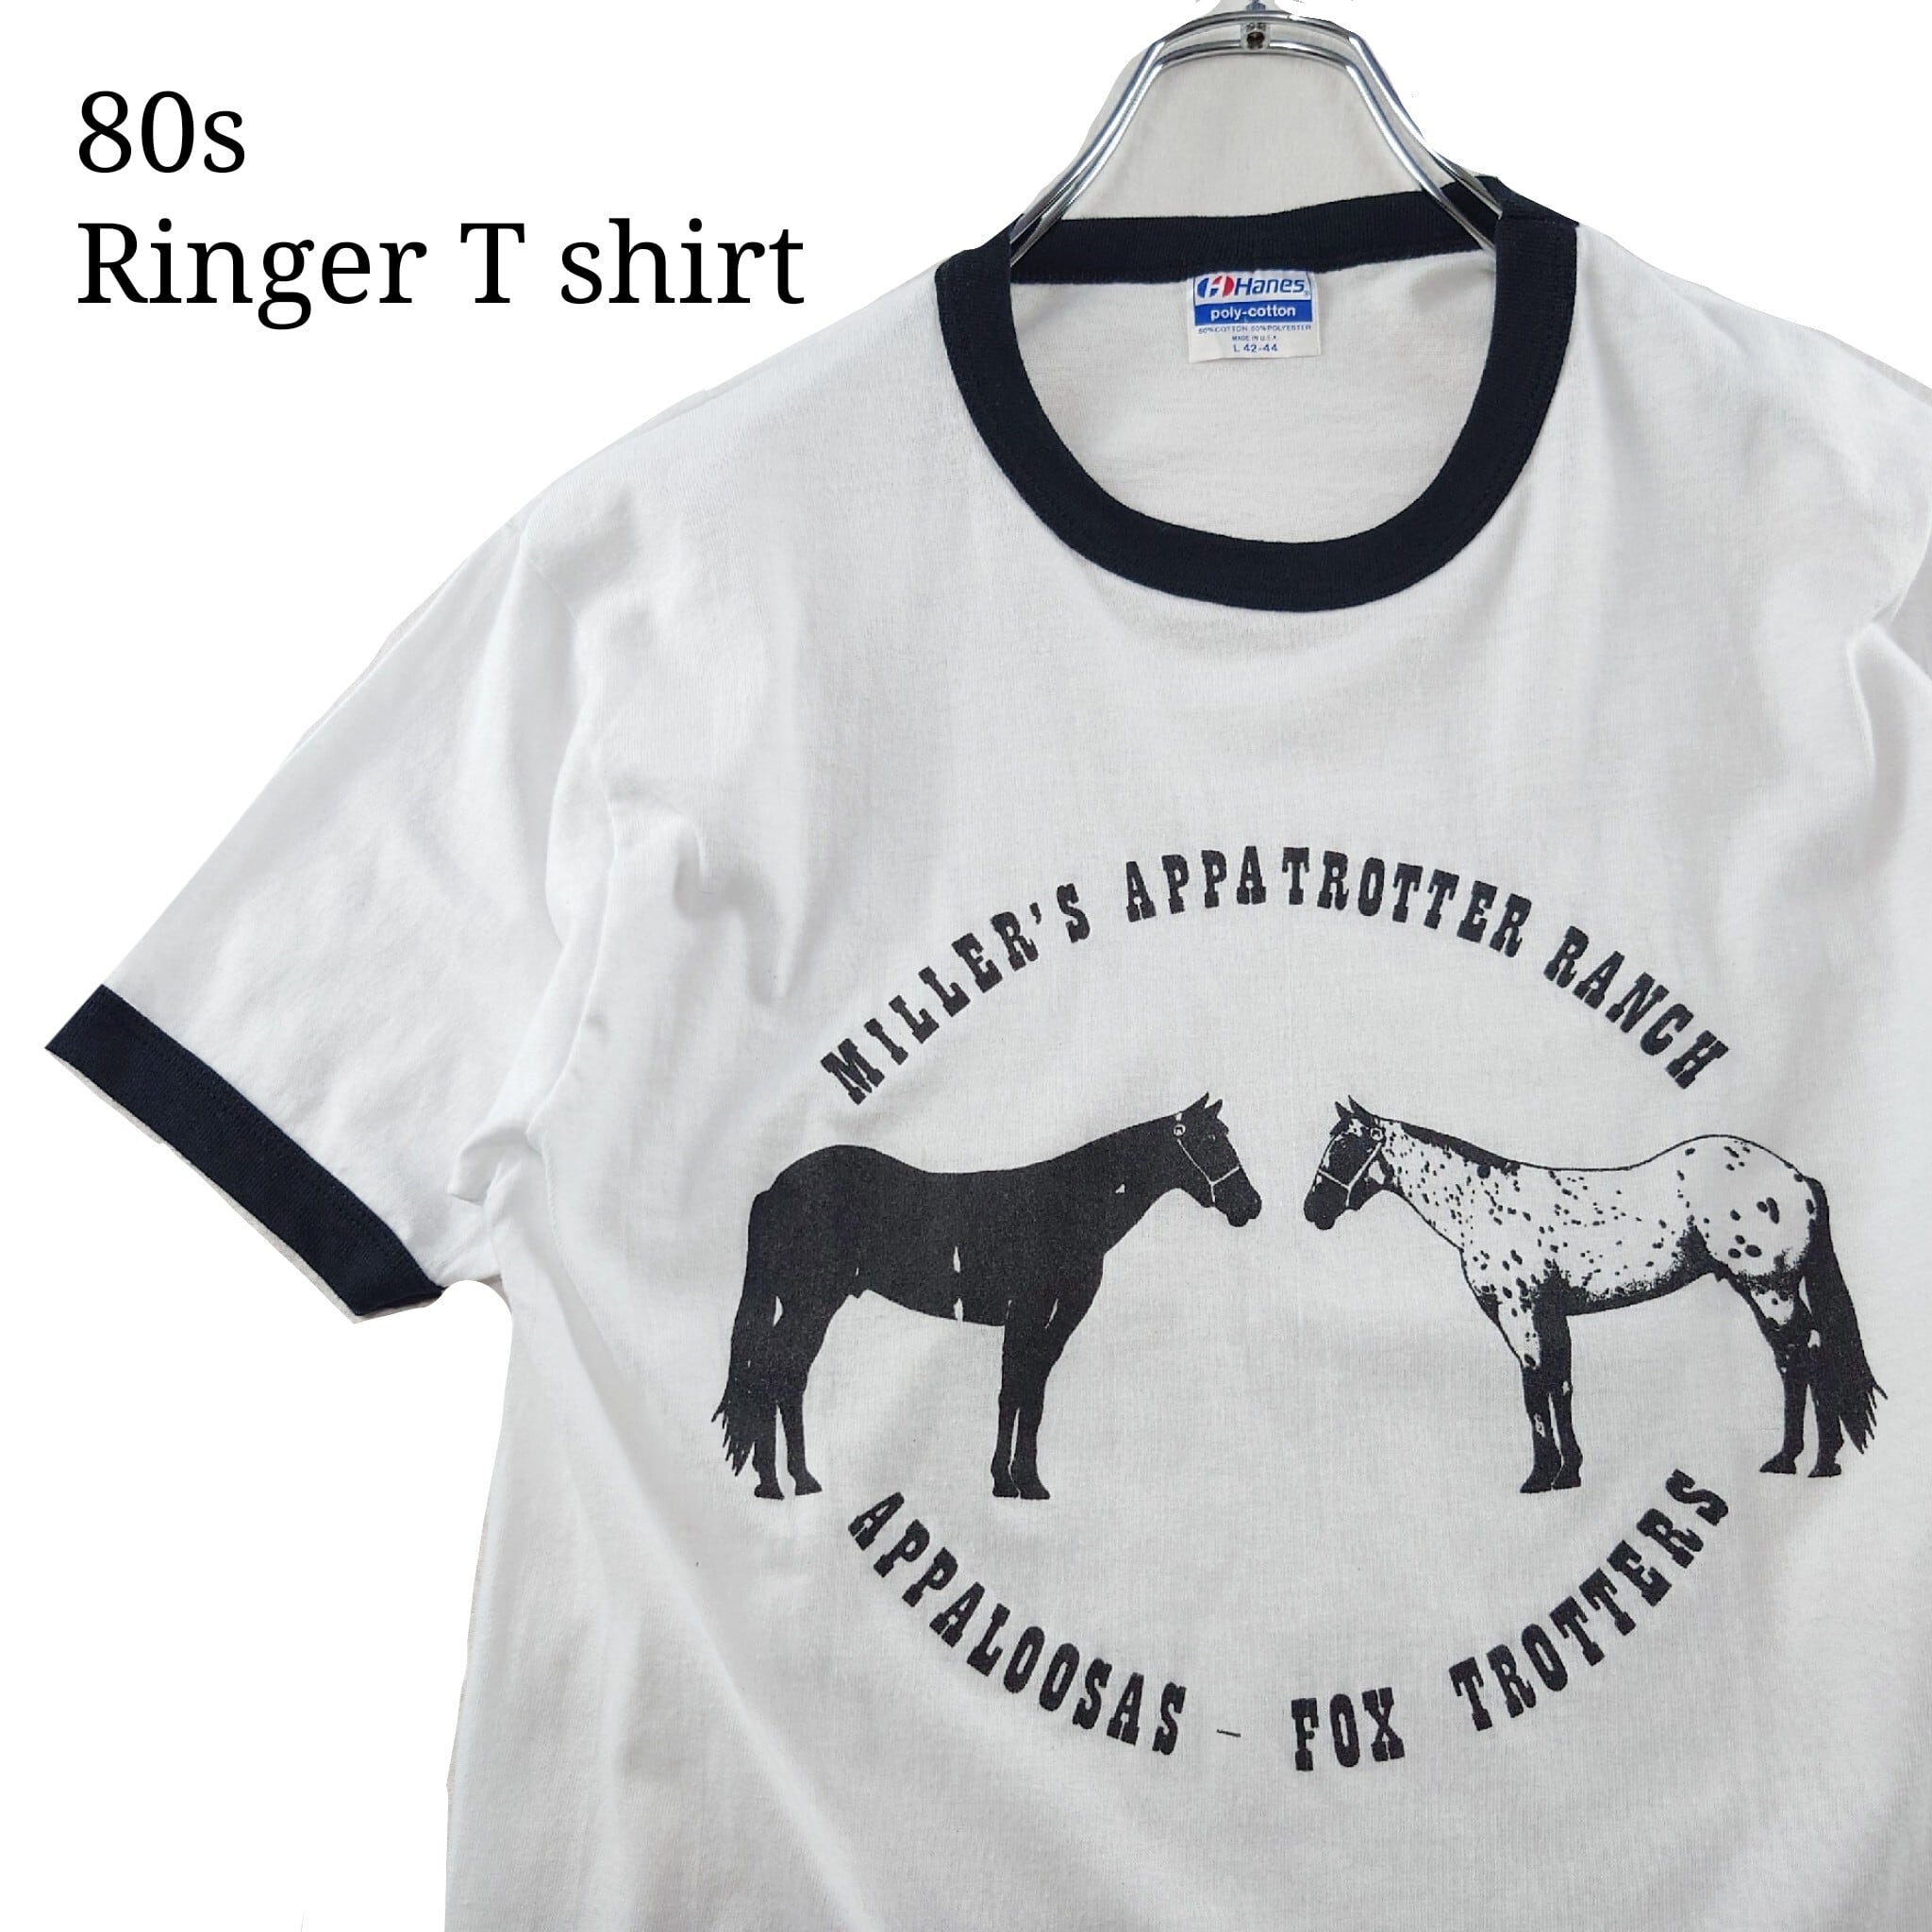 80s hanes リンガーtシャツ USA製 vintageシングルステッチ - Tシャツ 